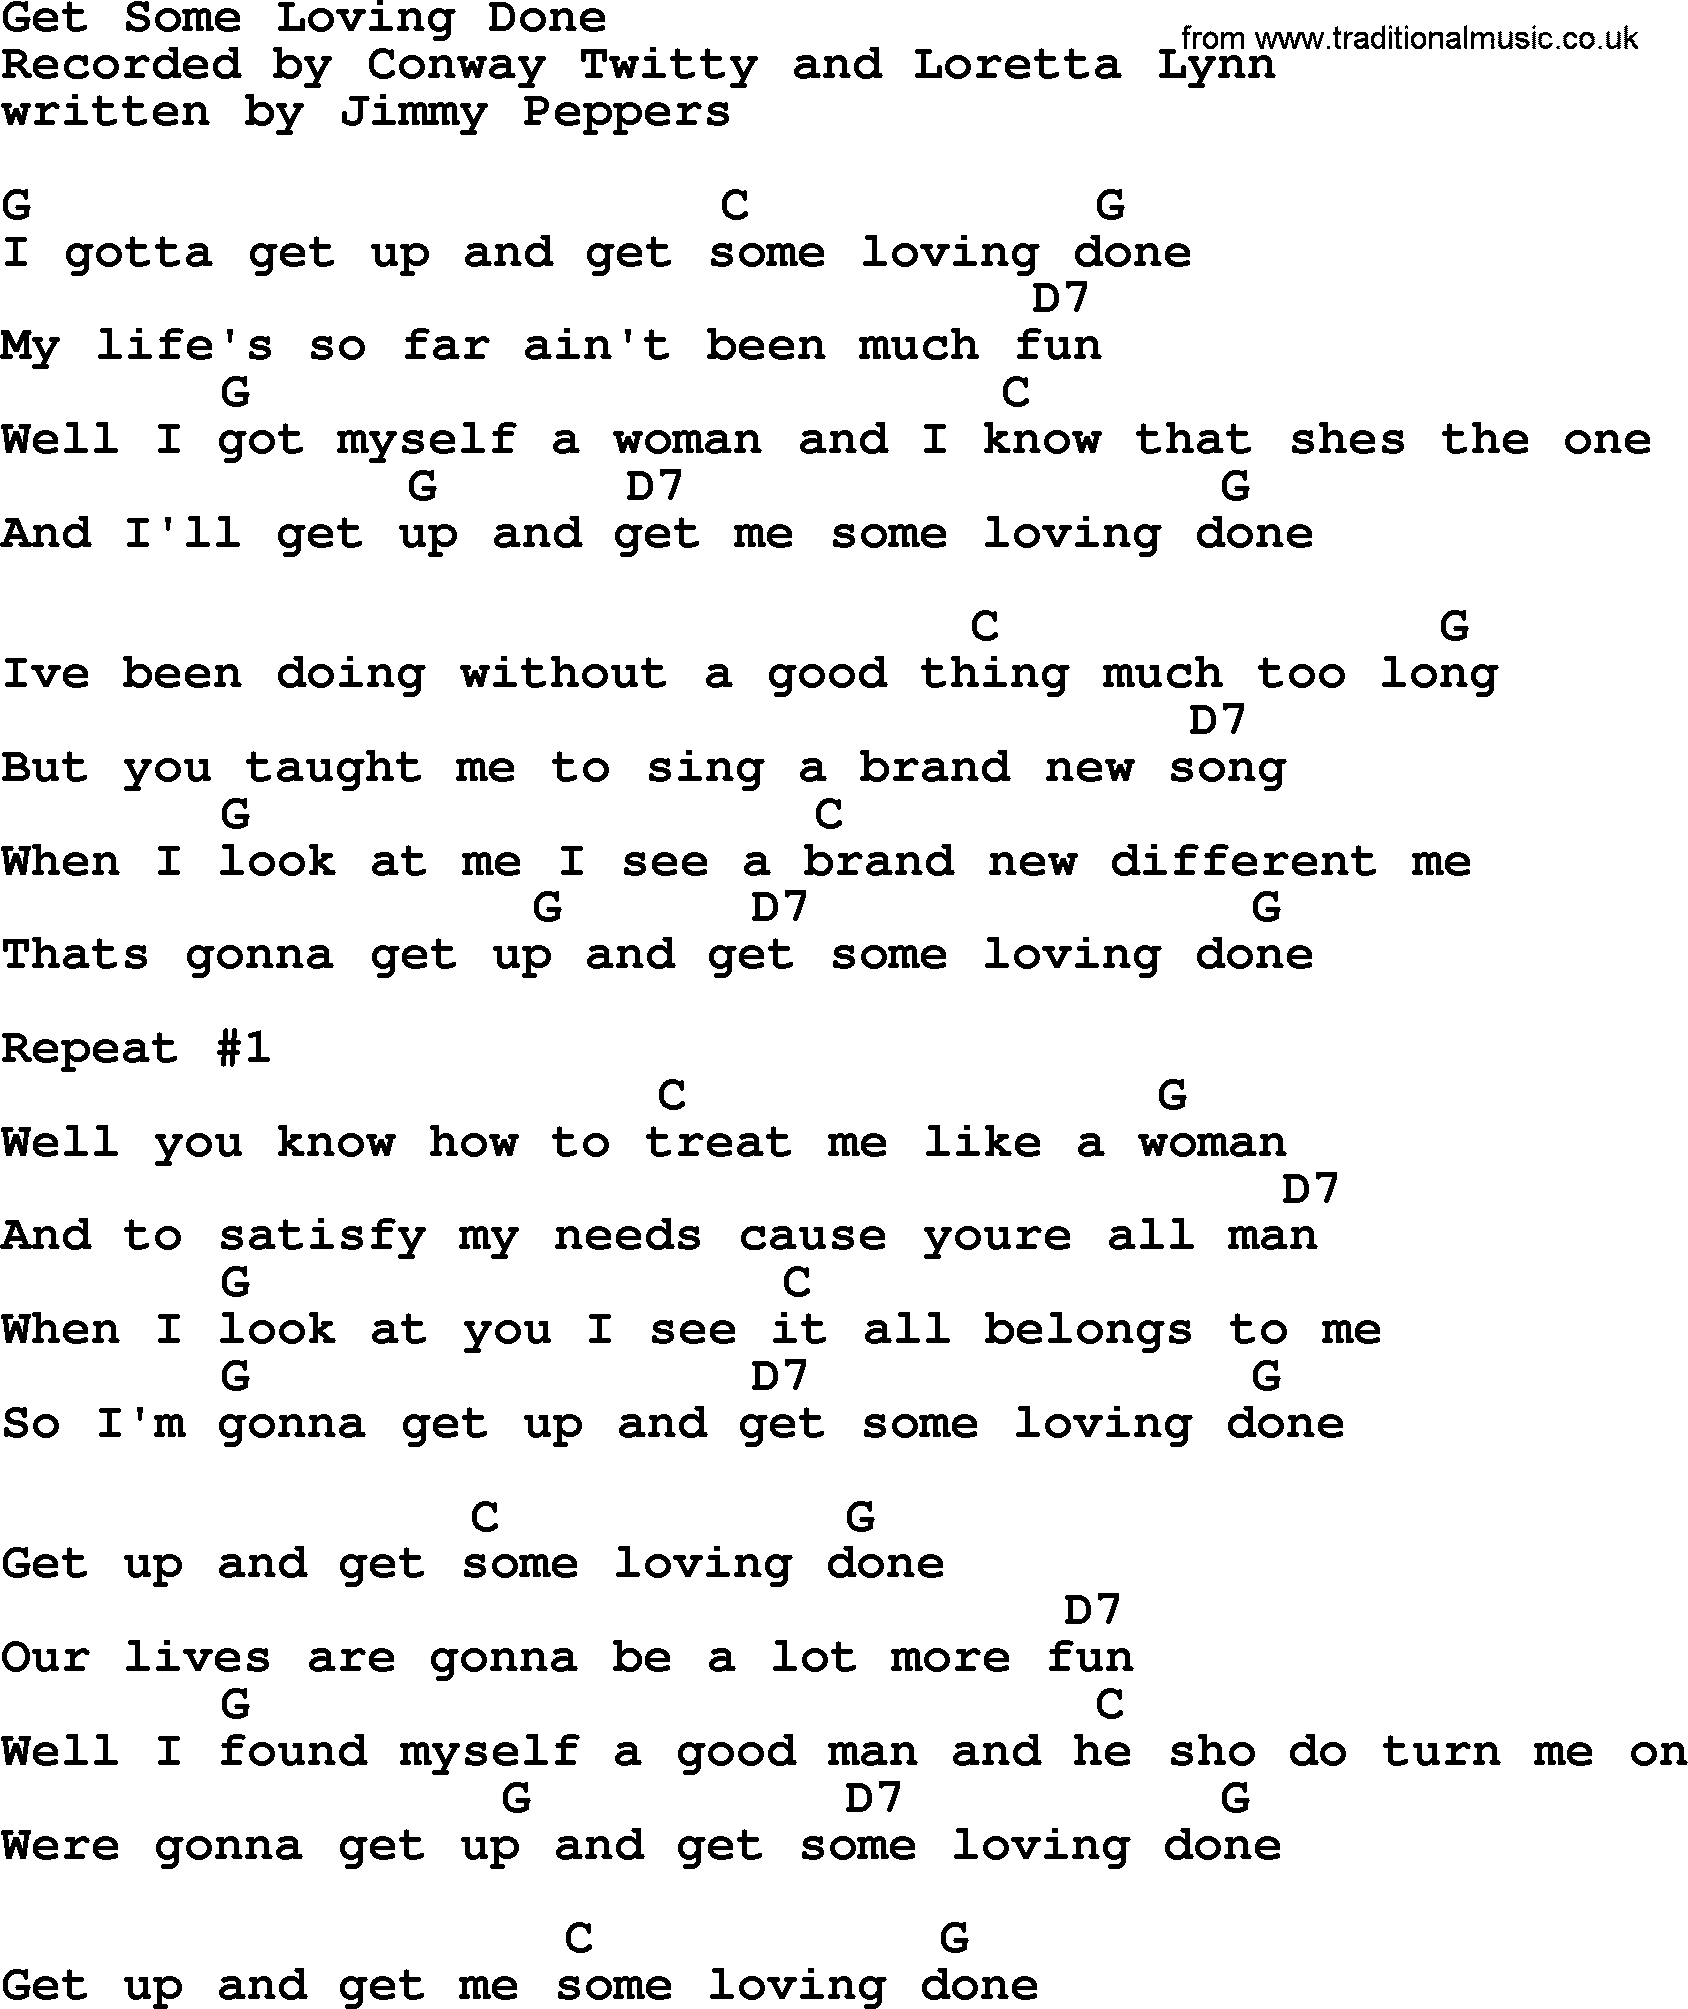 Loretta Lynn song: Get Some Loving Done lyrics and chords